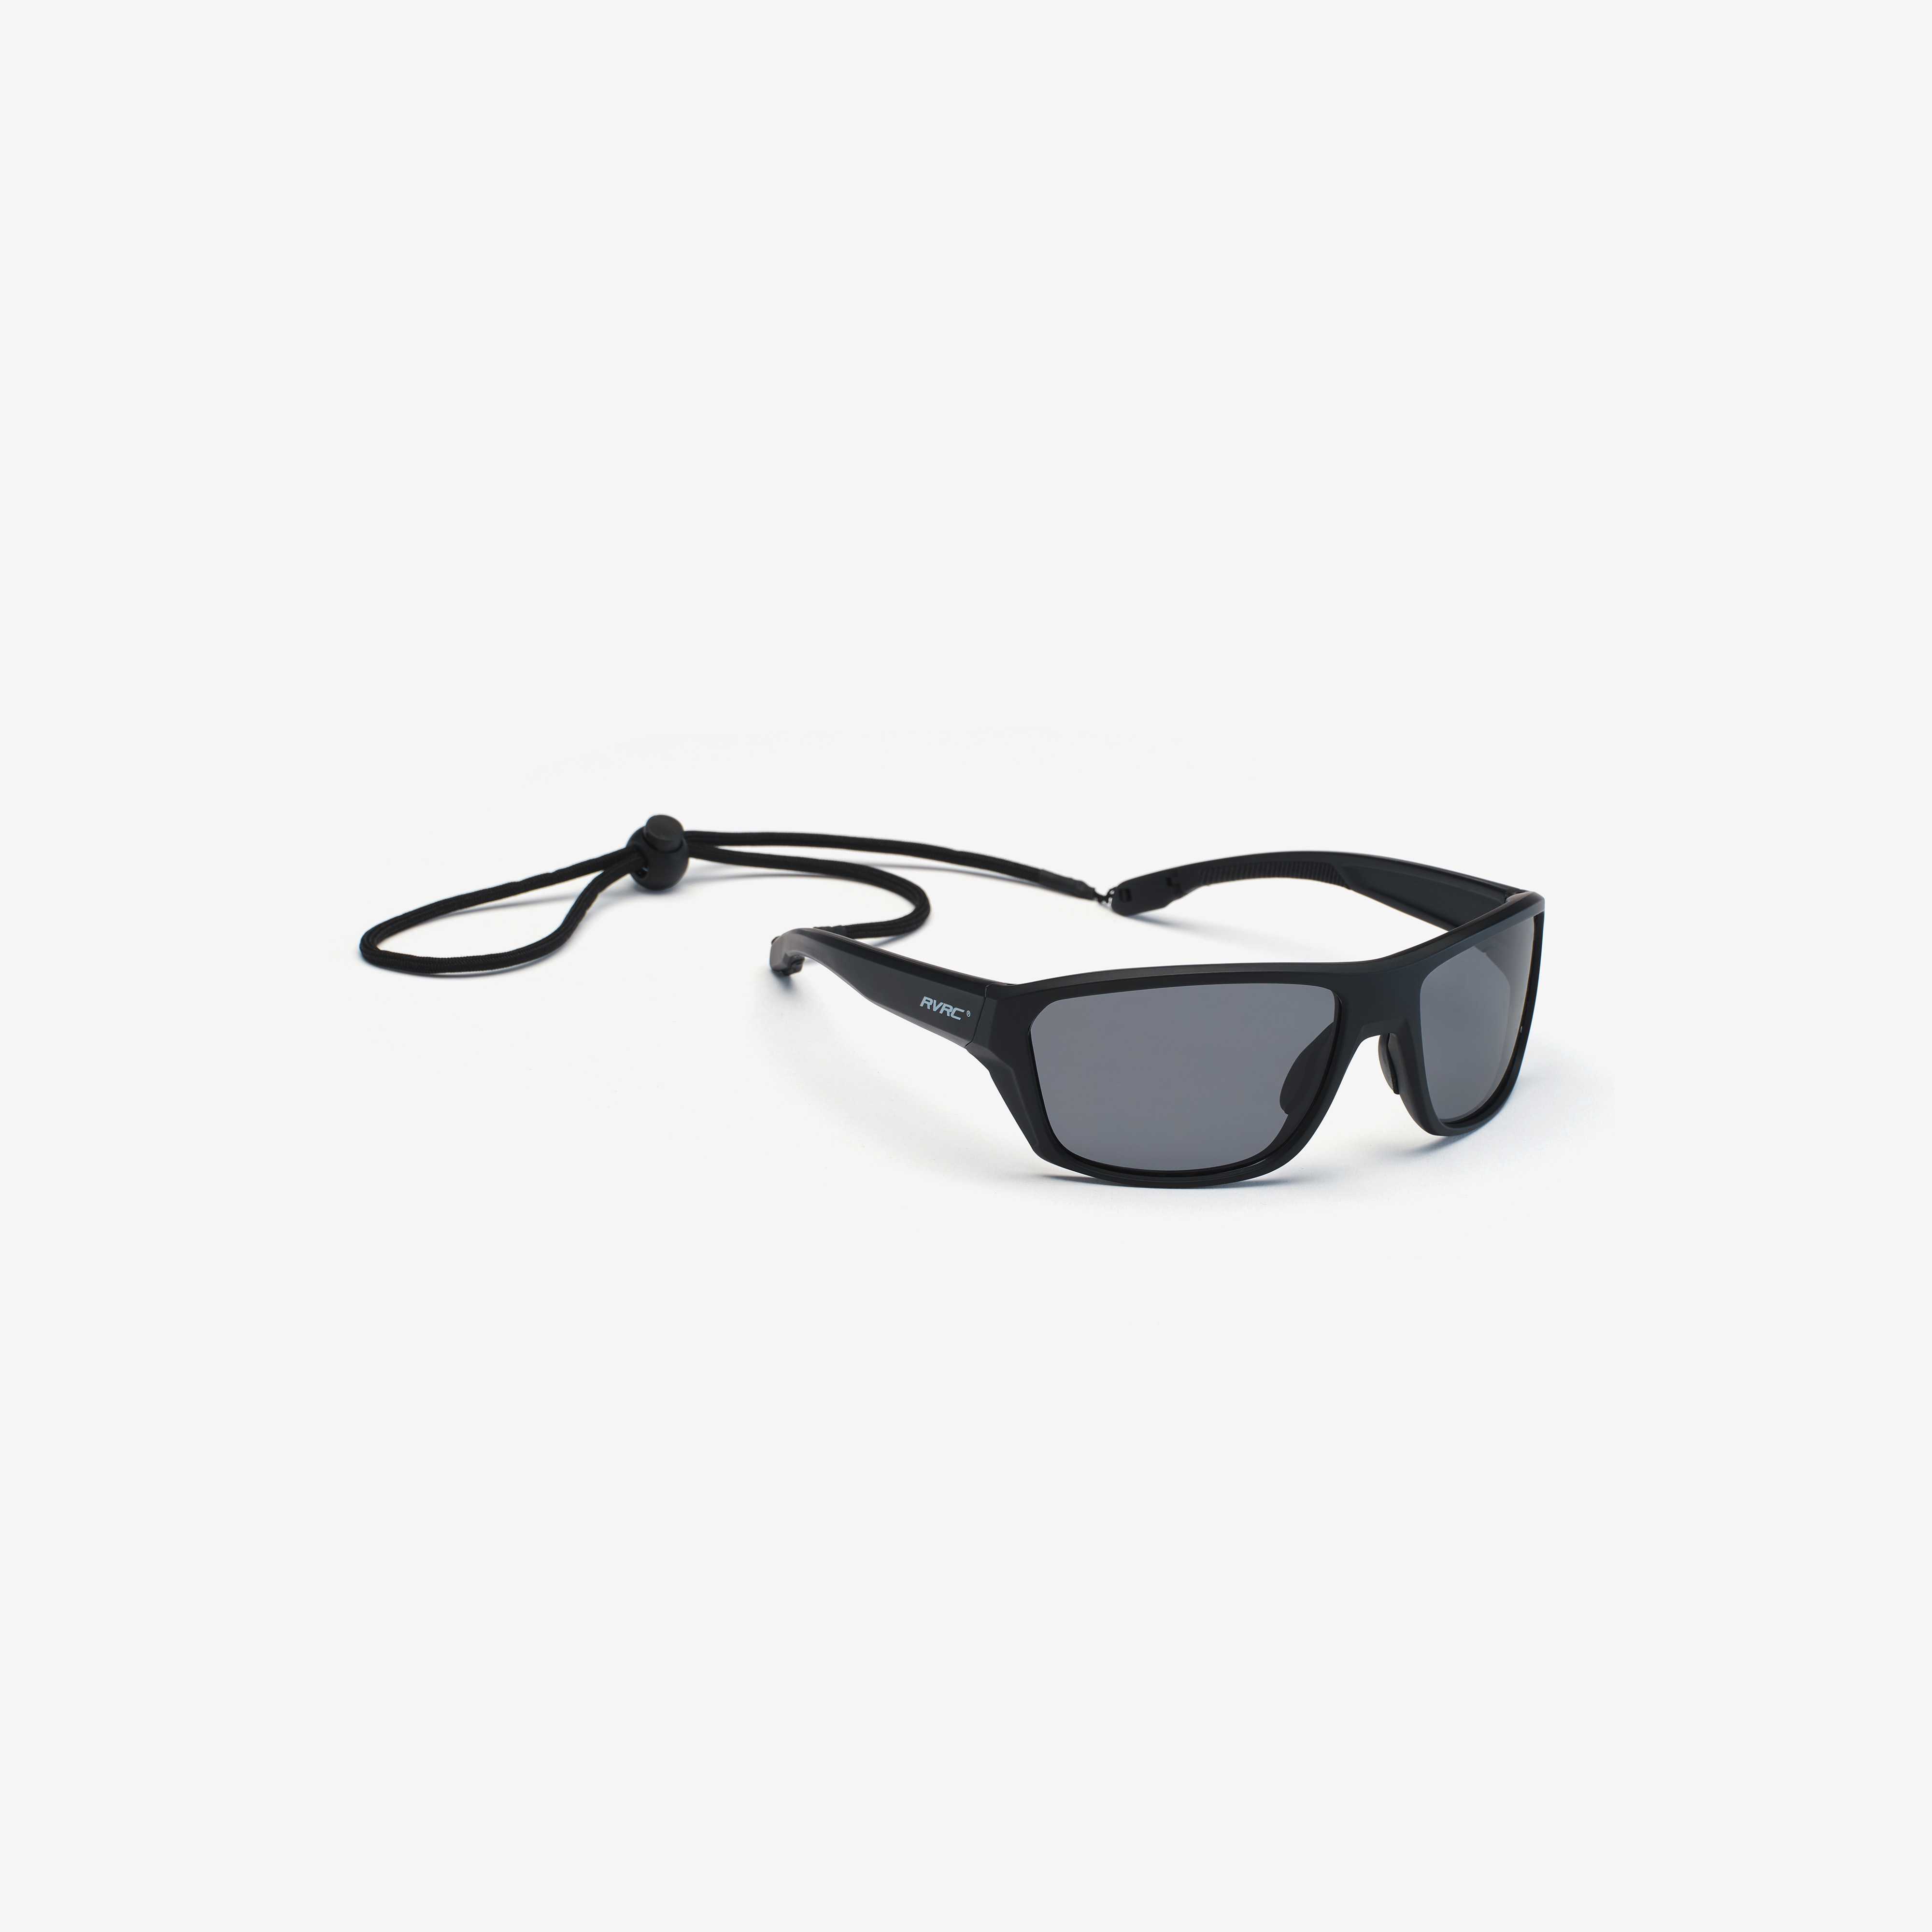 Virgo Polarized Sports Sunglasses Black/Smoke Grey